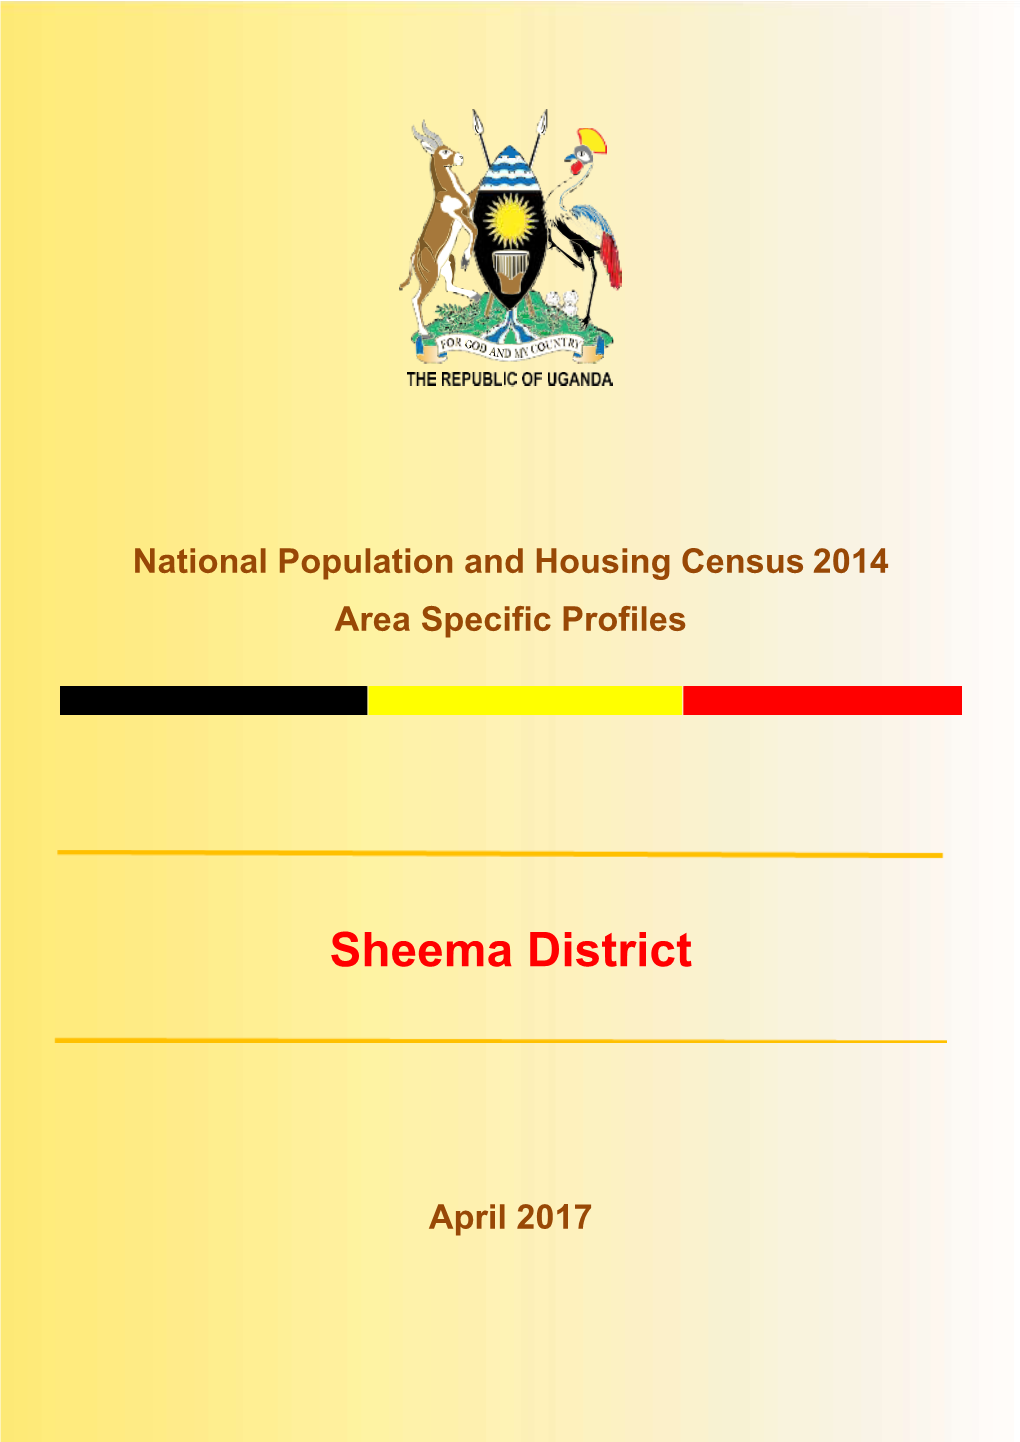 Sheema District